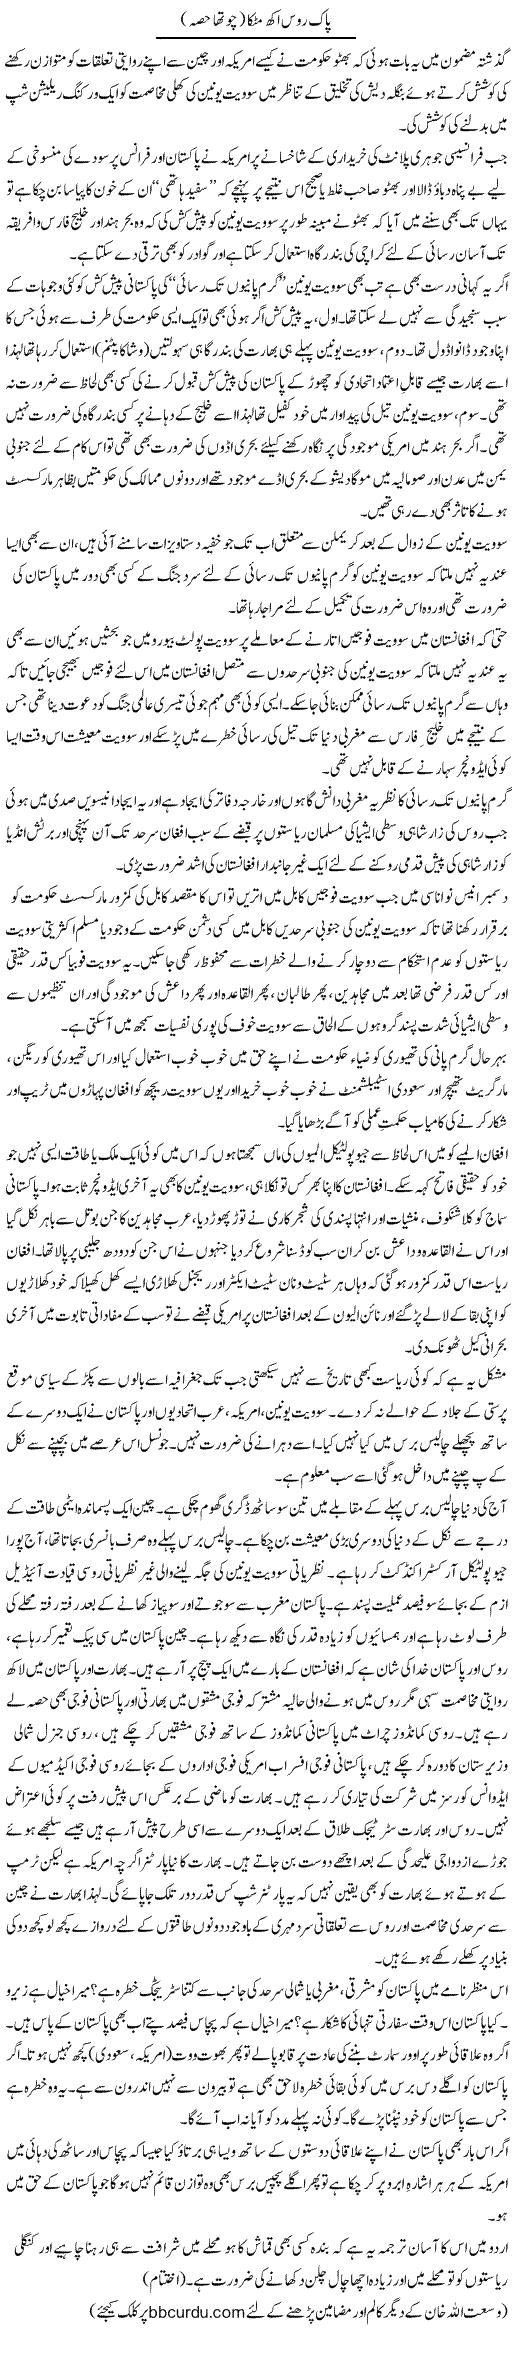 Pak Roos Akh Matakka (4) | Wusat Ullah Khan | Daily Urdu Columns